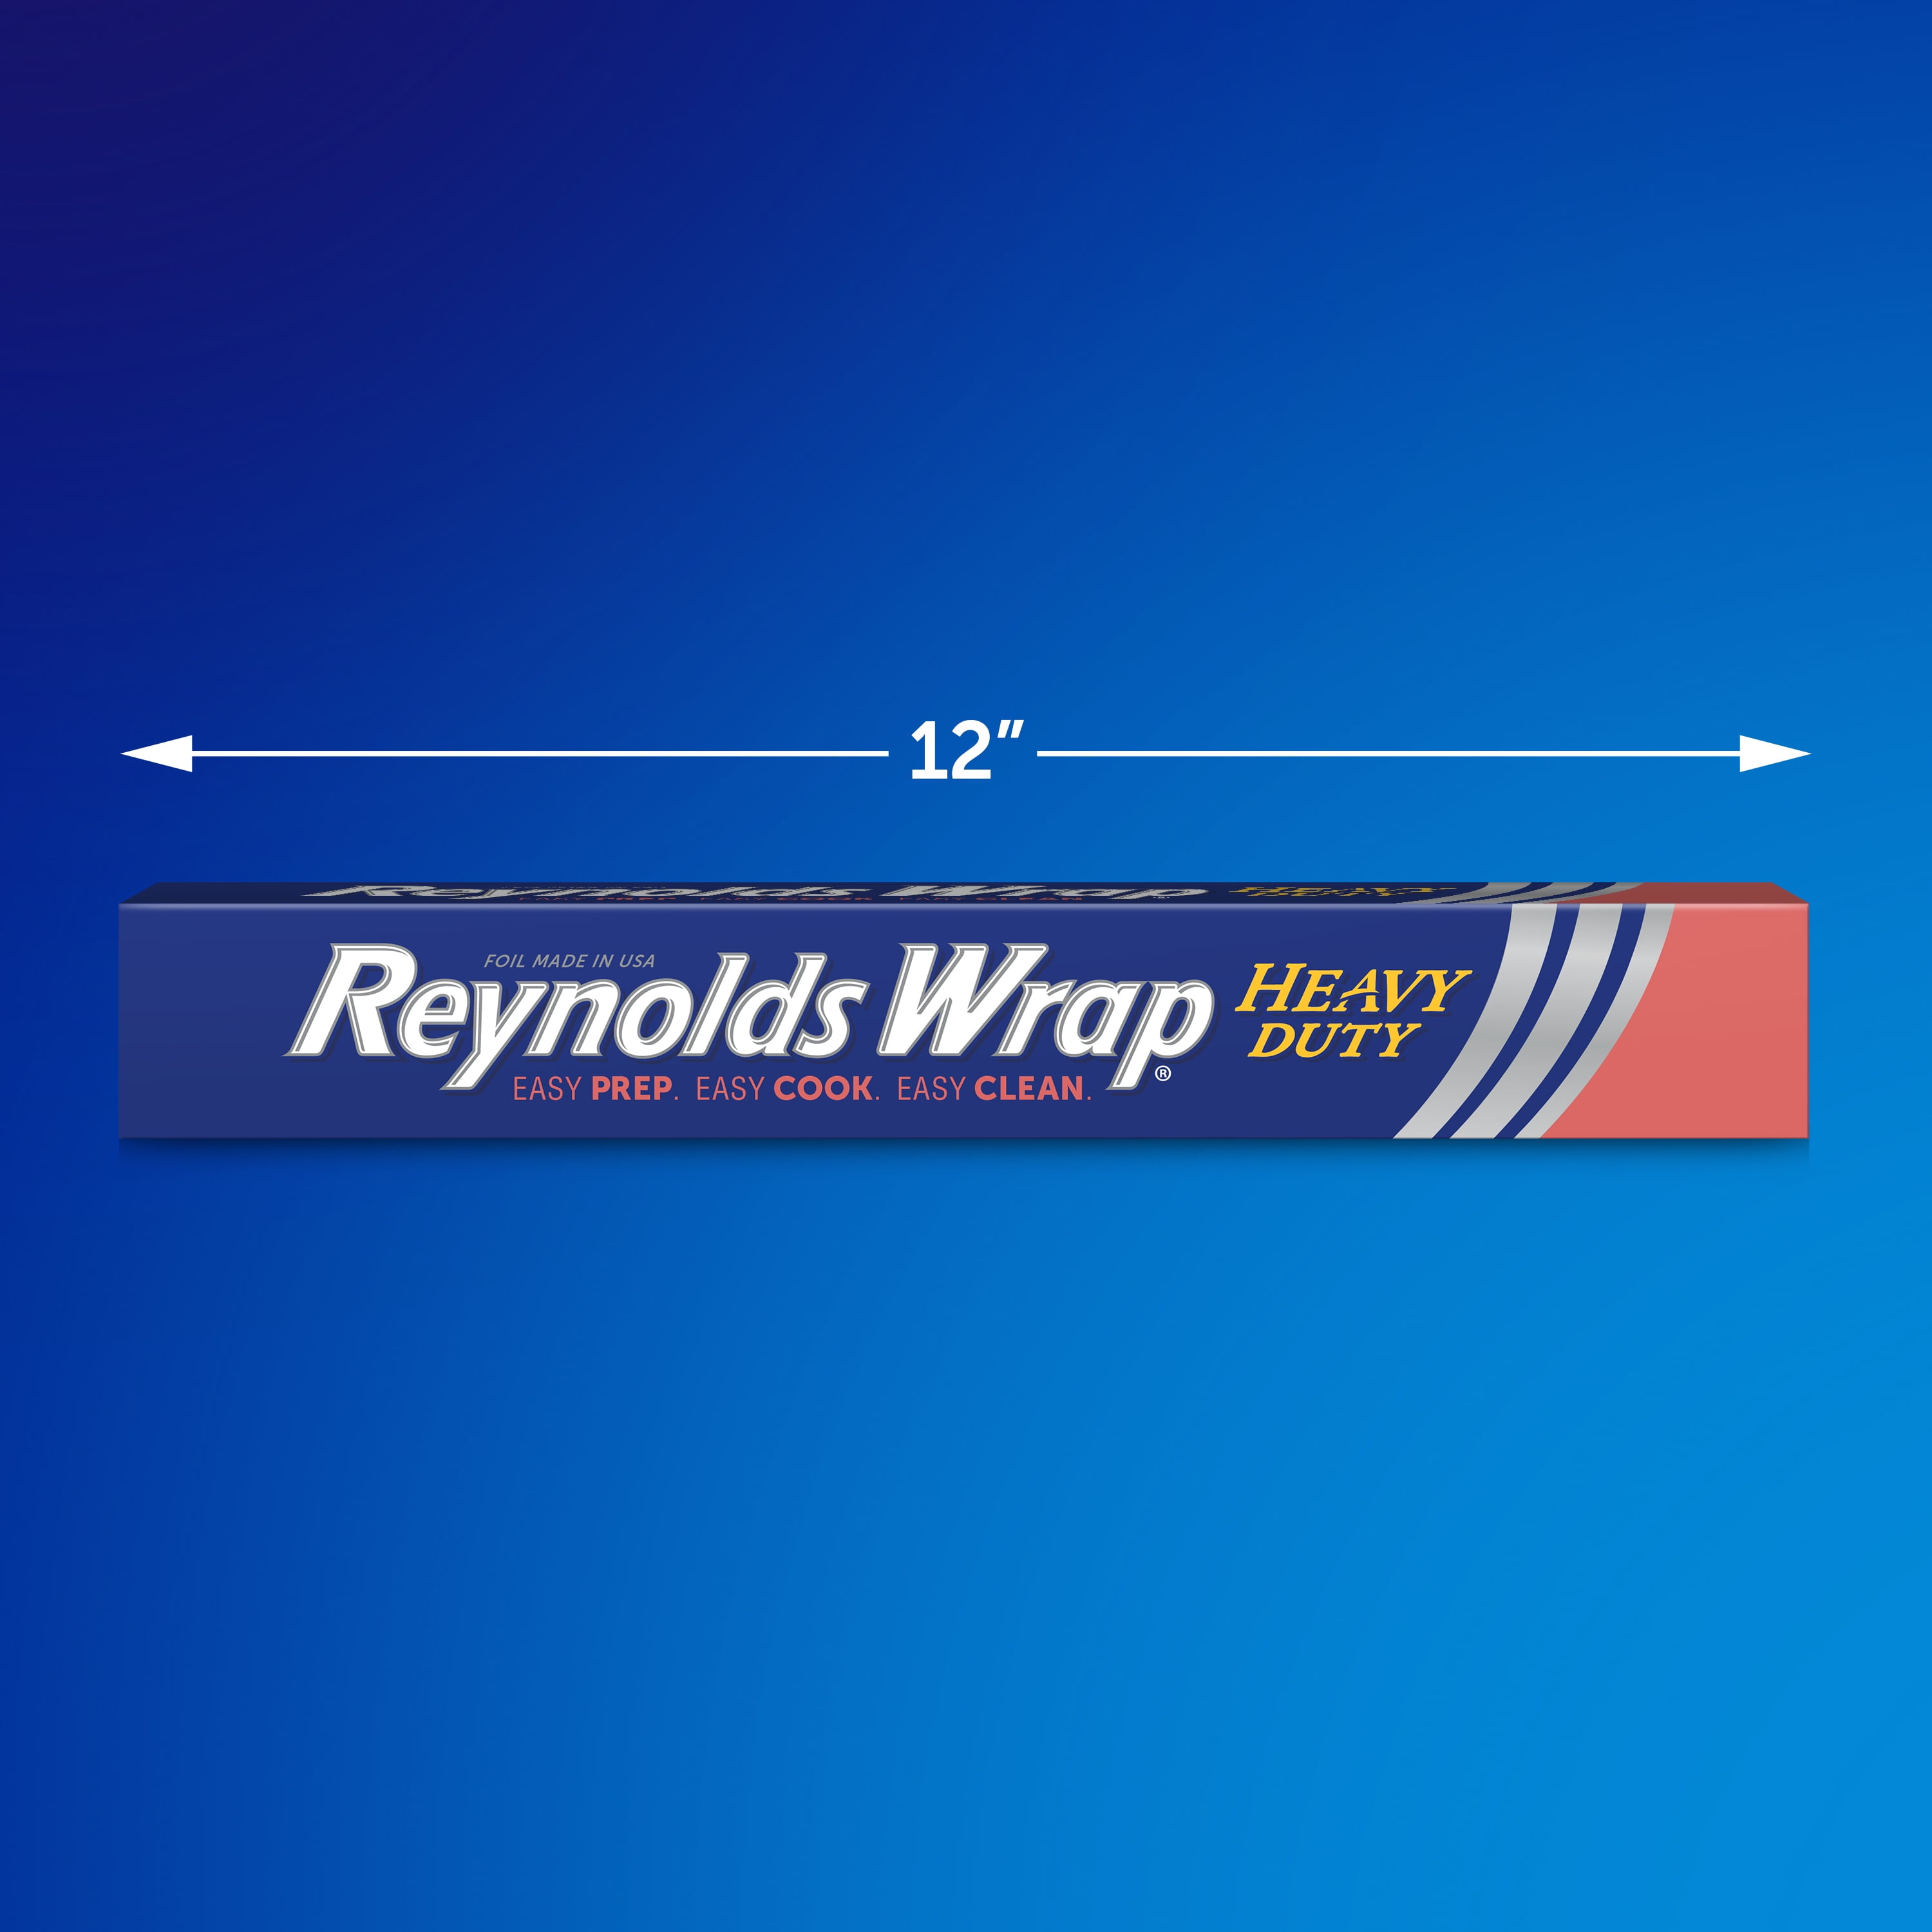 Extra Heavy-Duty Aluminum Foil Roll by Reynolds Wrap® RFP632